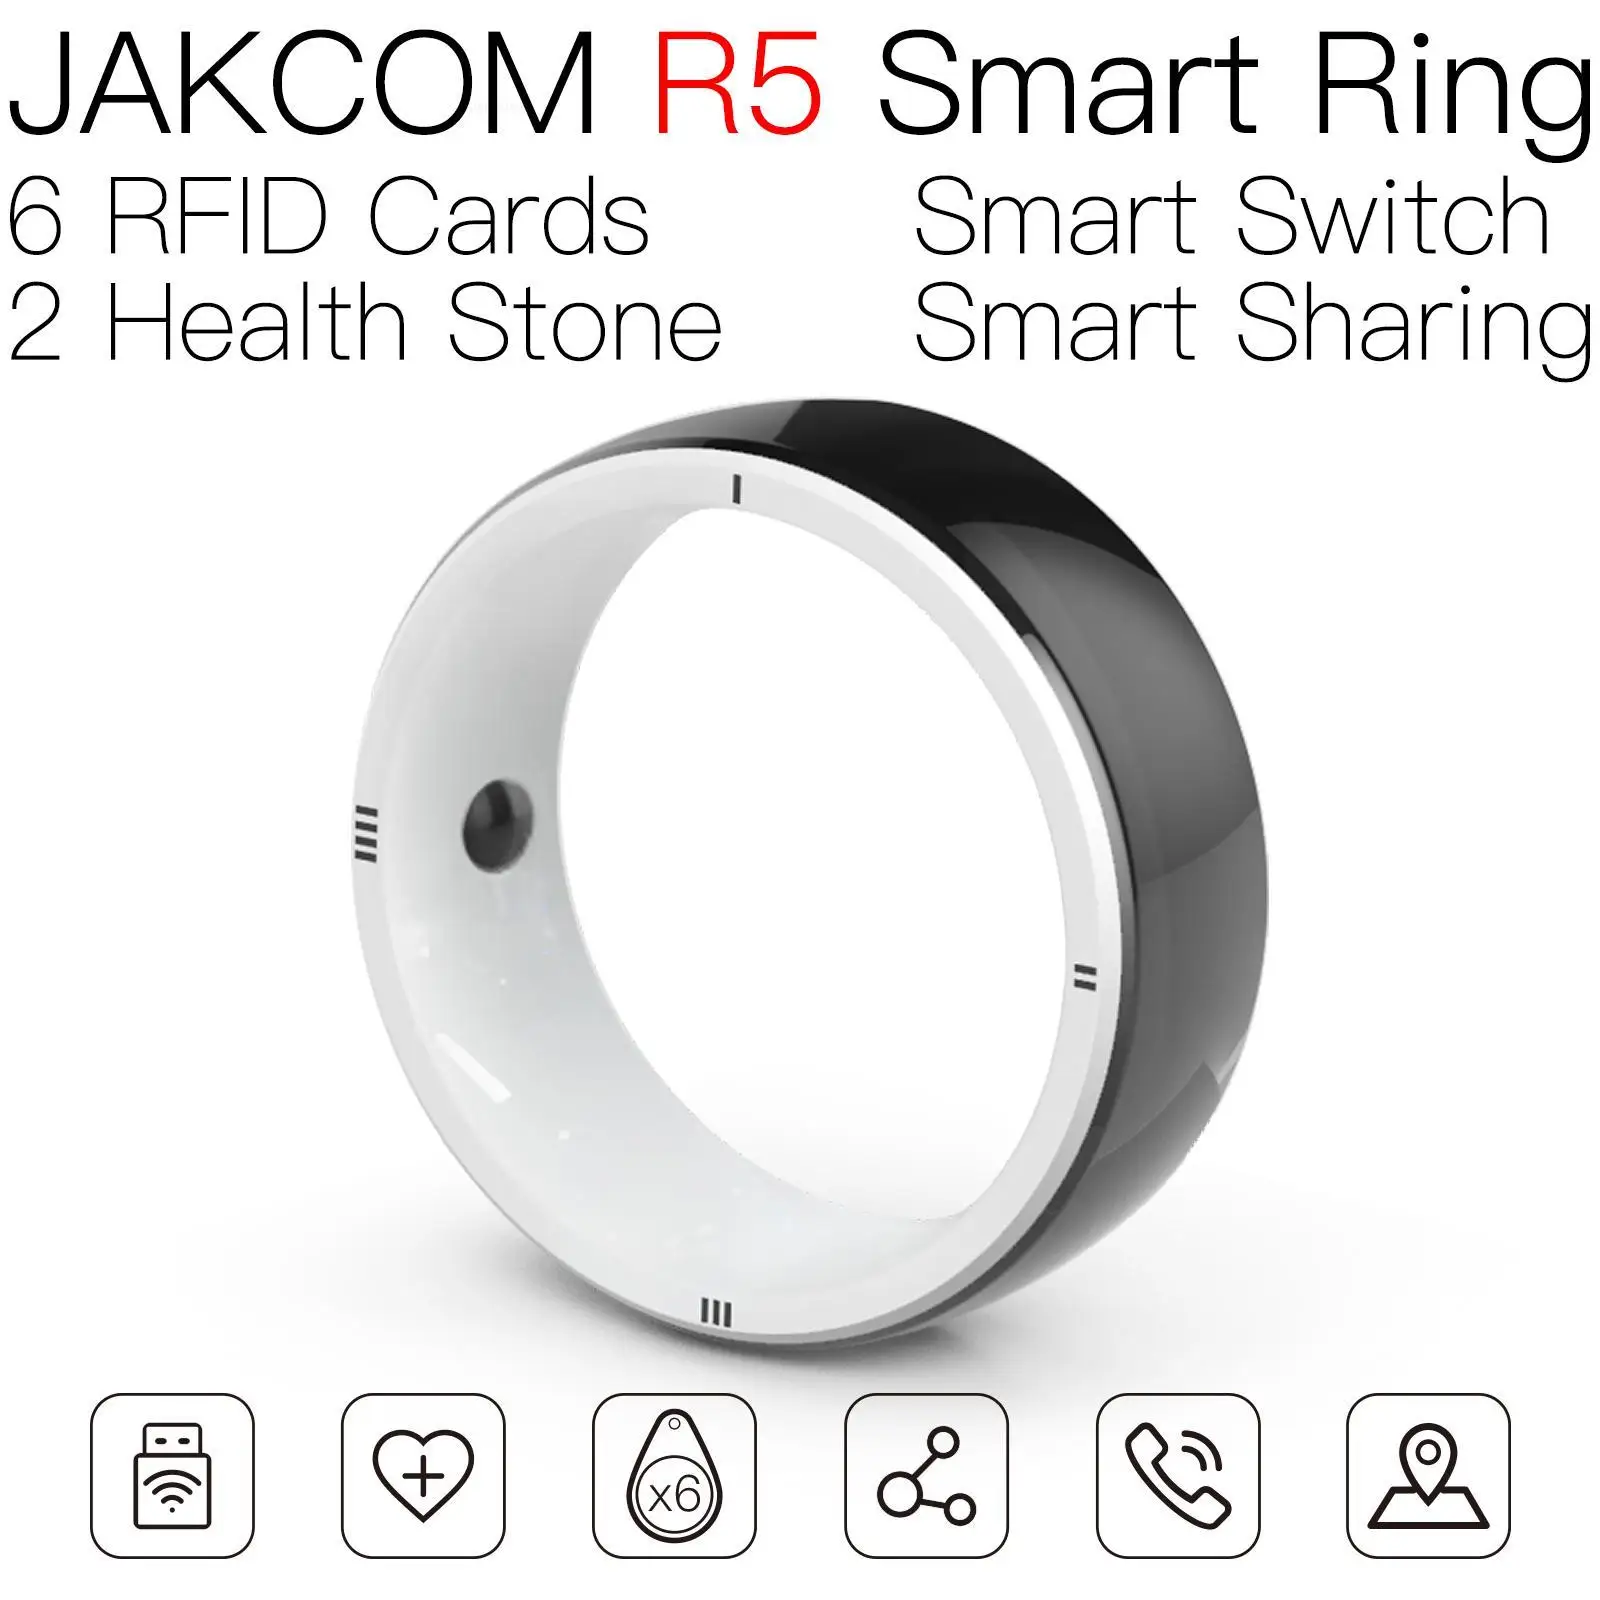 

JAKCOM R5 Smart Ring better than supper smach uhf rfid insignia de 125 racing pigeons amiboo mini em 4305 long range